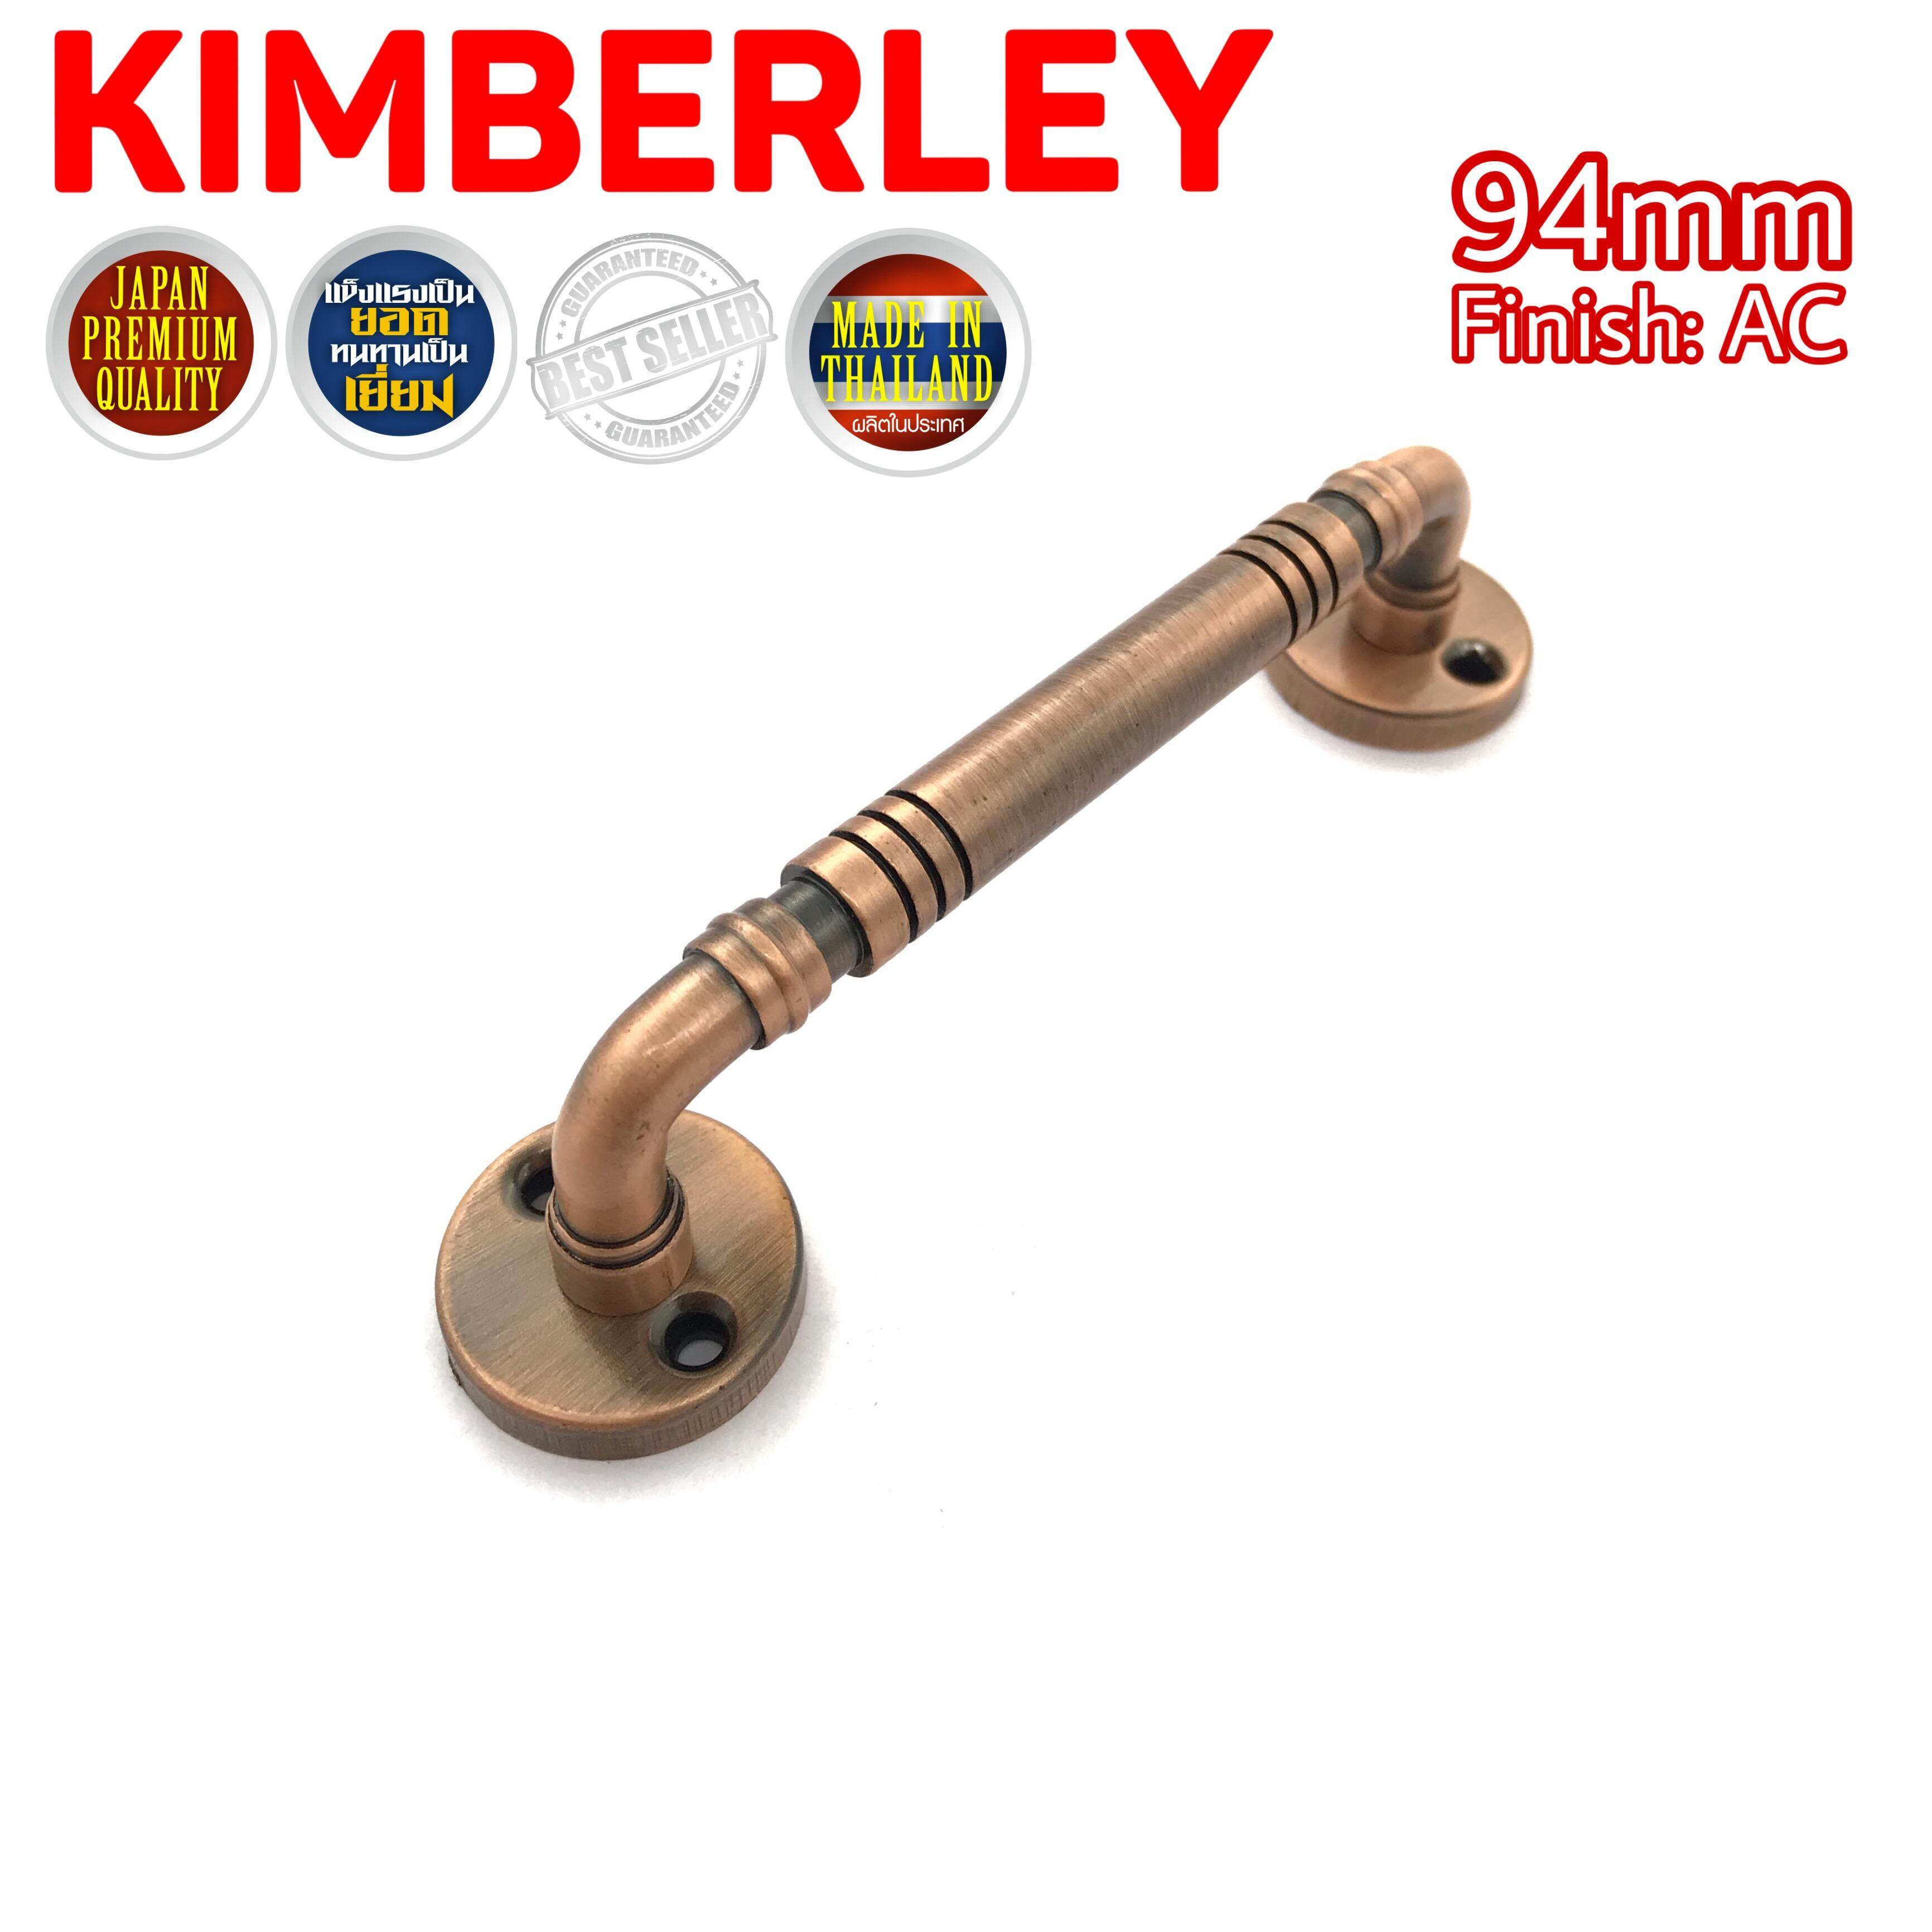 KIMBERLEY มือจับประตู มือจับหน้าต่าง มือจับตู้ มือจับกลึงลายชุบทองแดงรมดำ NO.7800-94mm AC (JAPAN QUALITY)